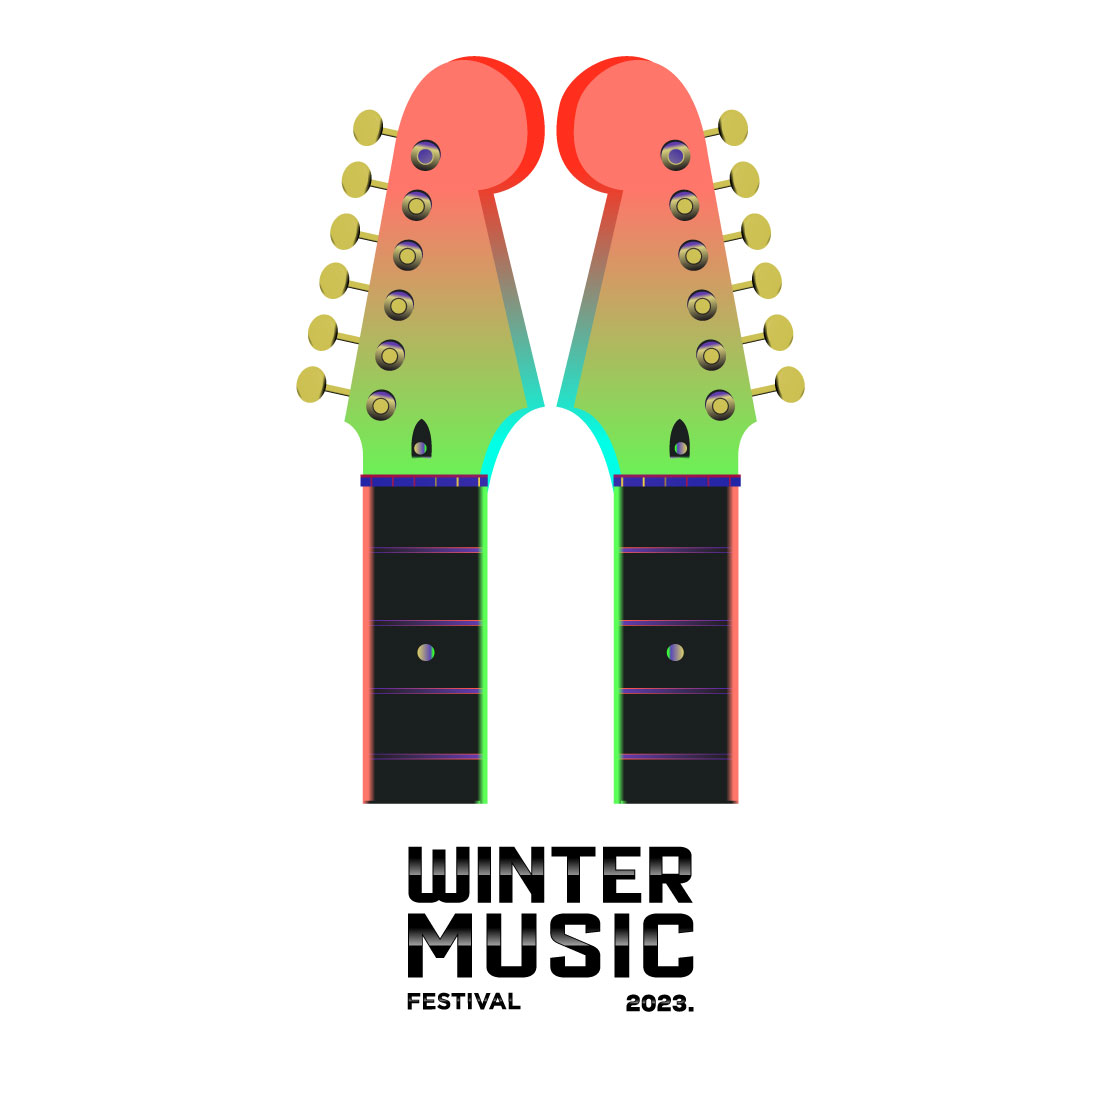 Flyer Festival Winter Music Design preview image.